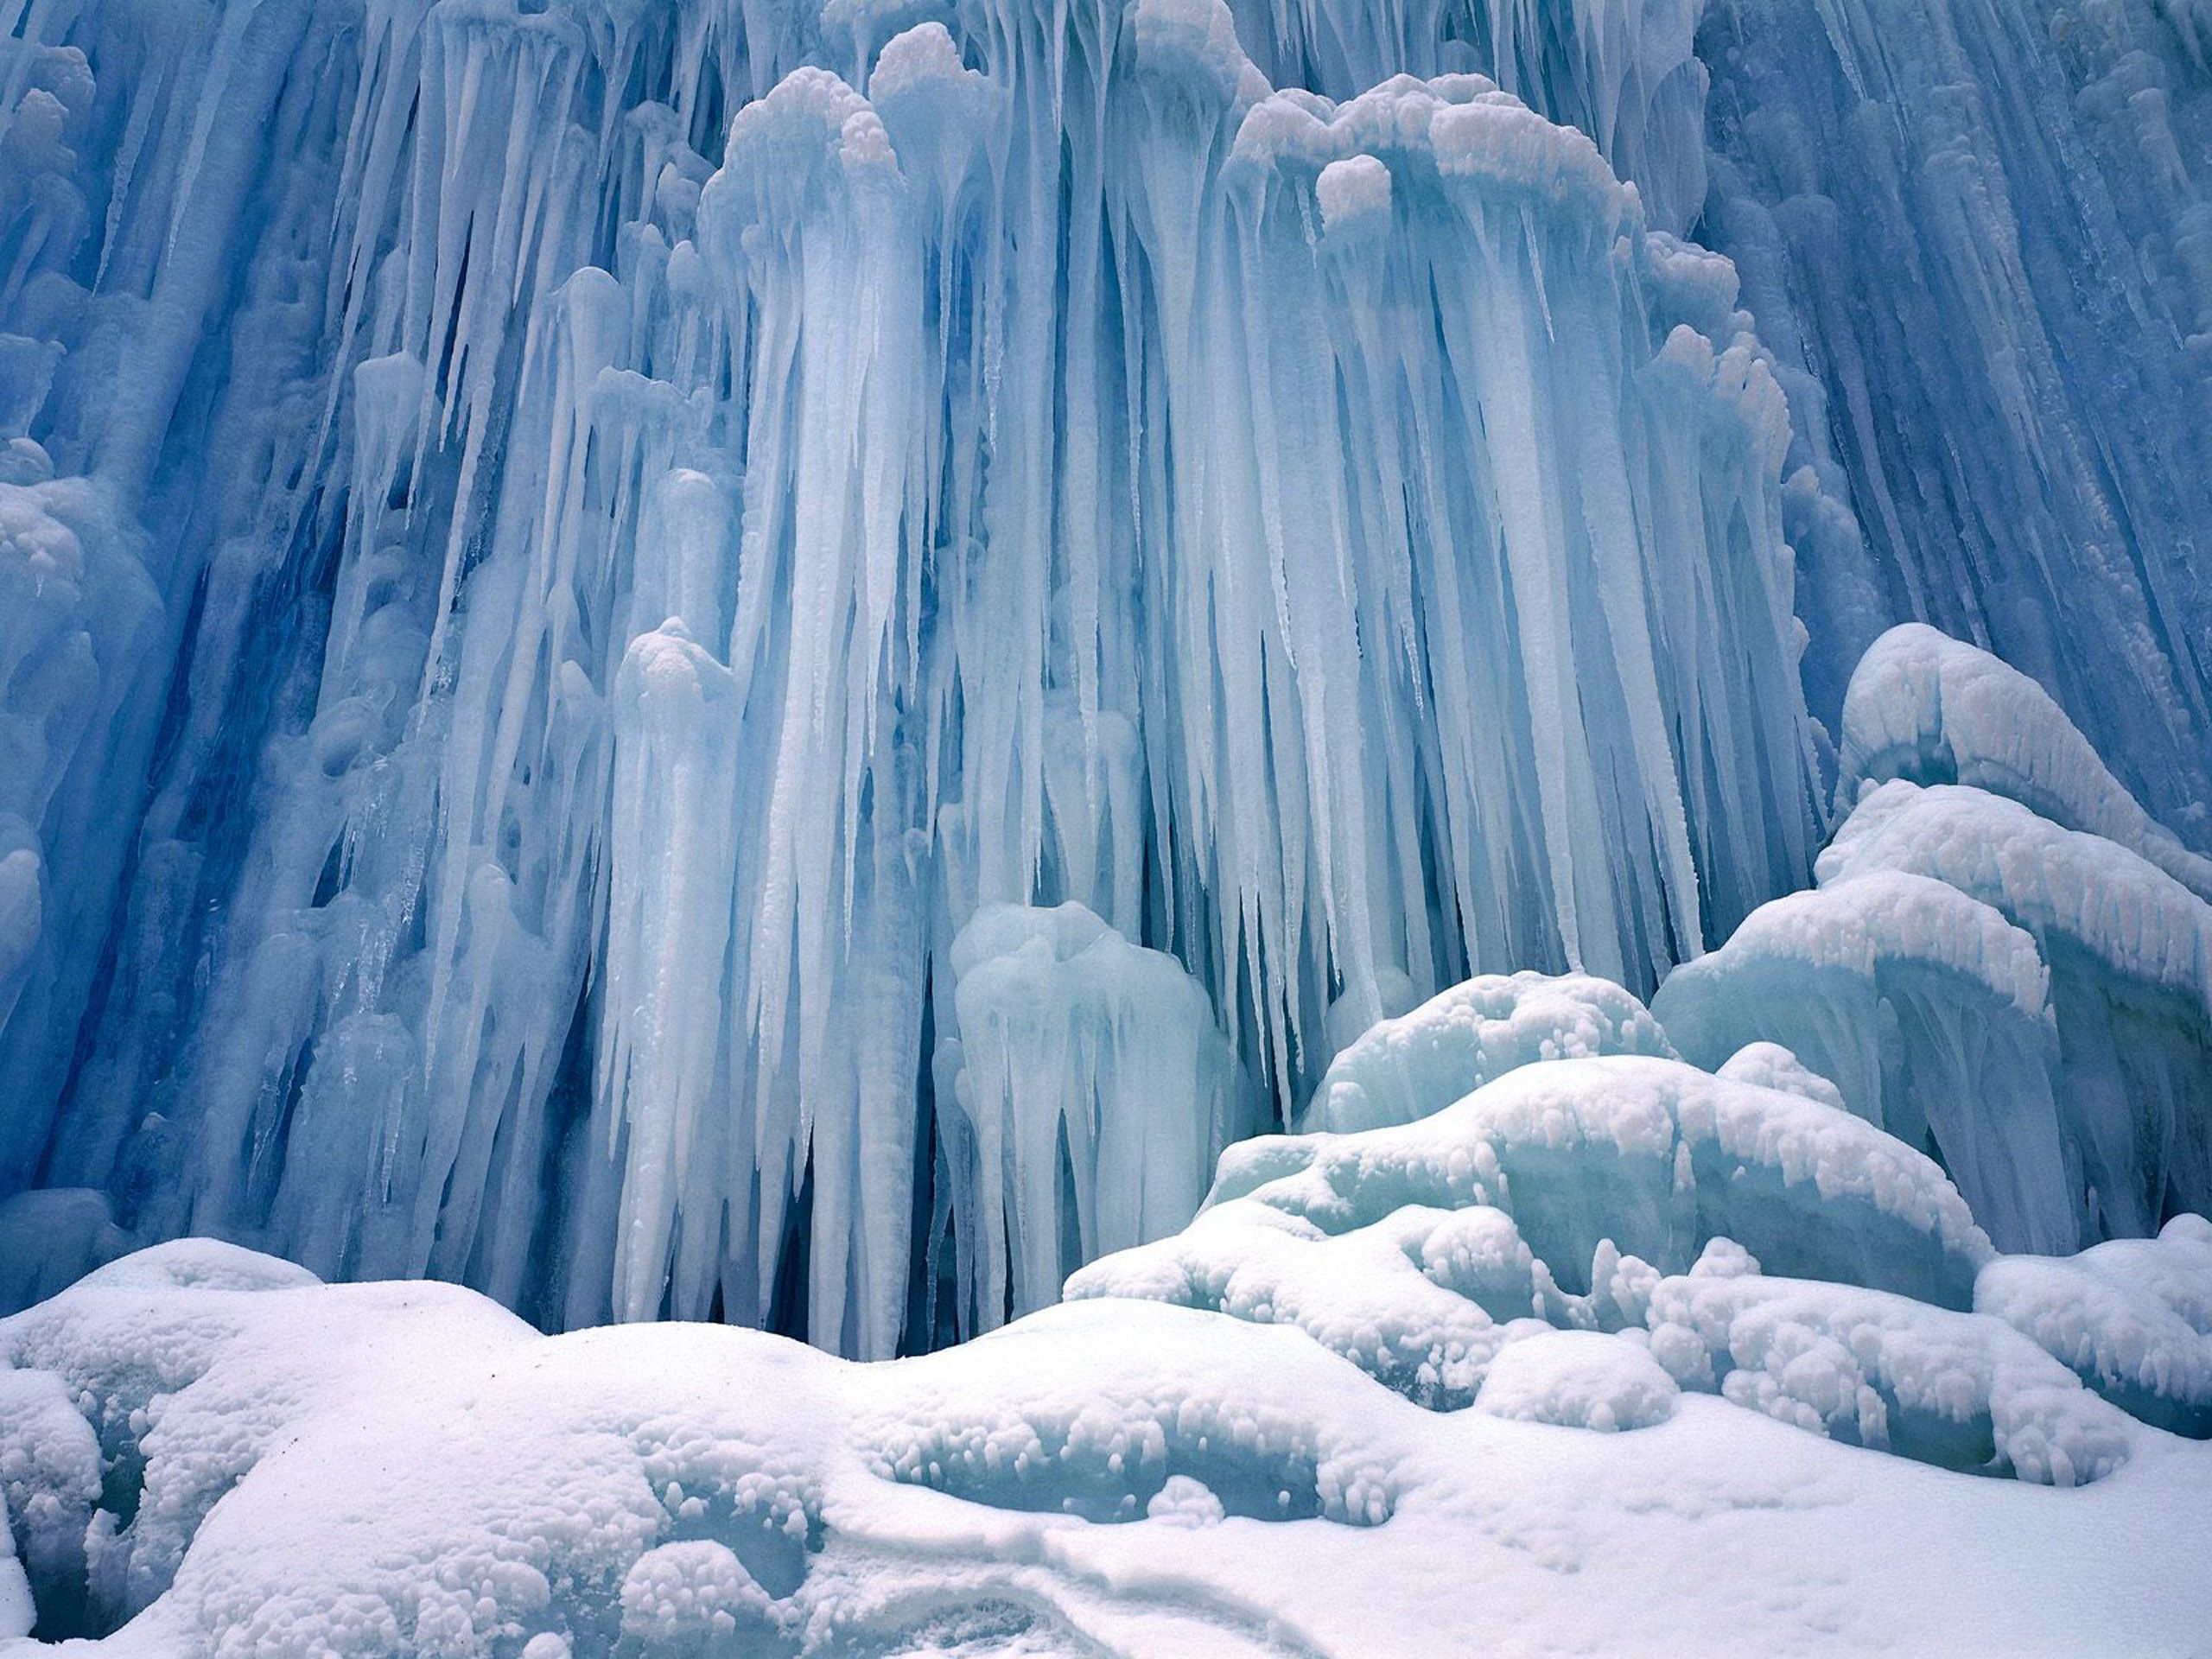 Winter Ice Scenes. Winter wallpaper .com